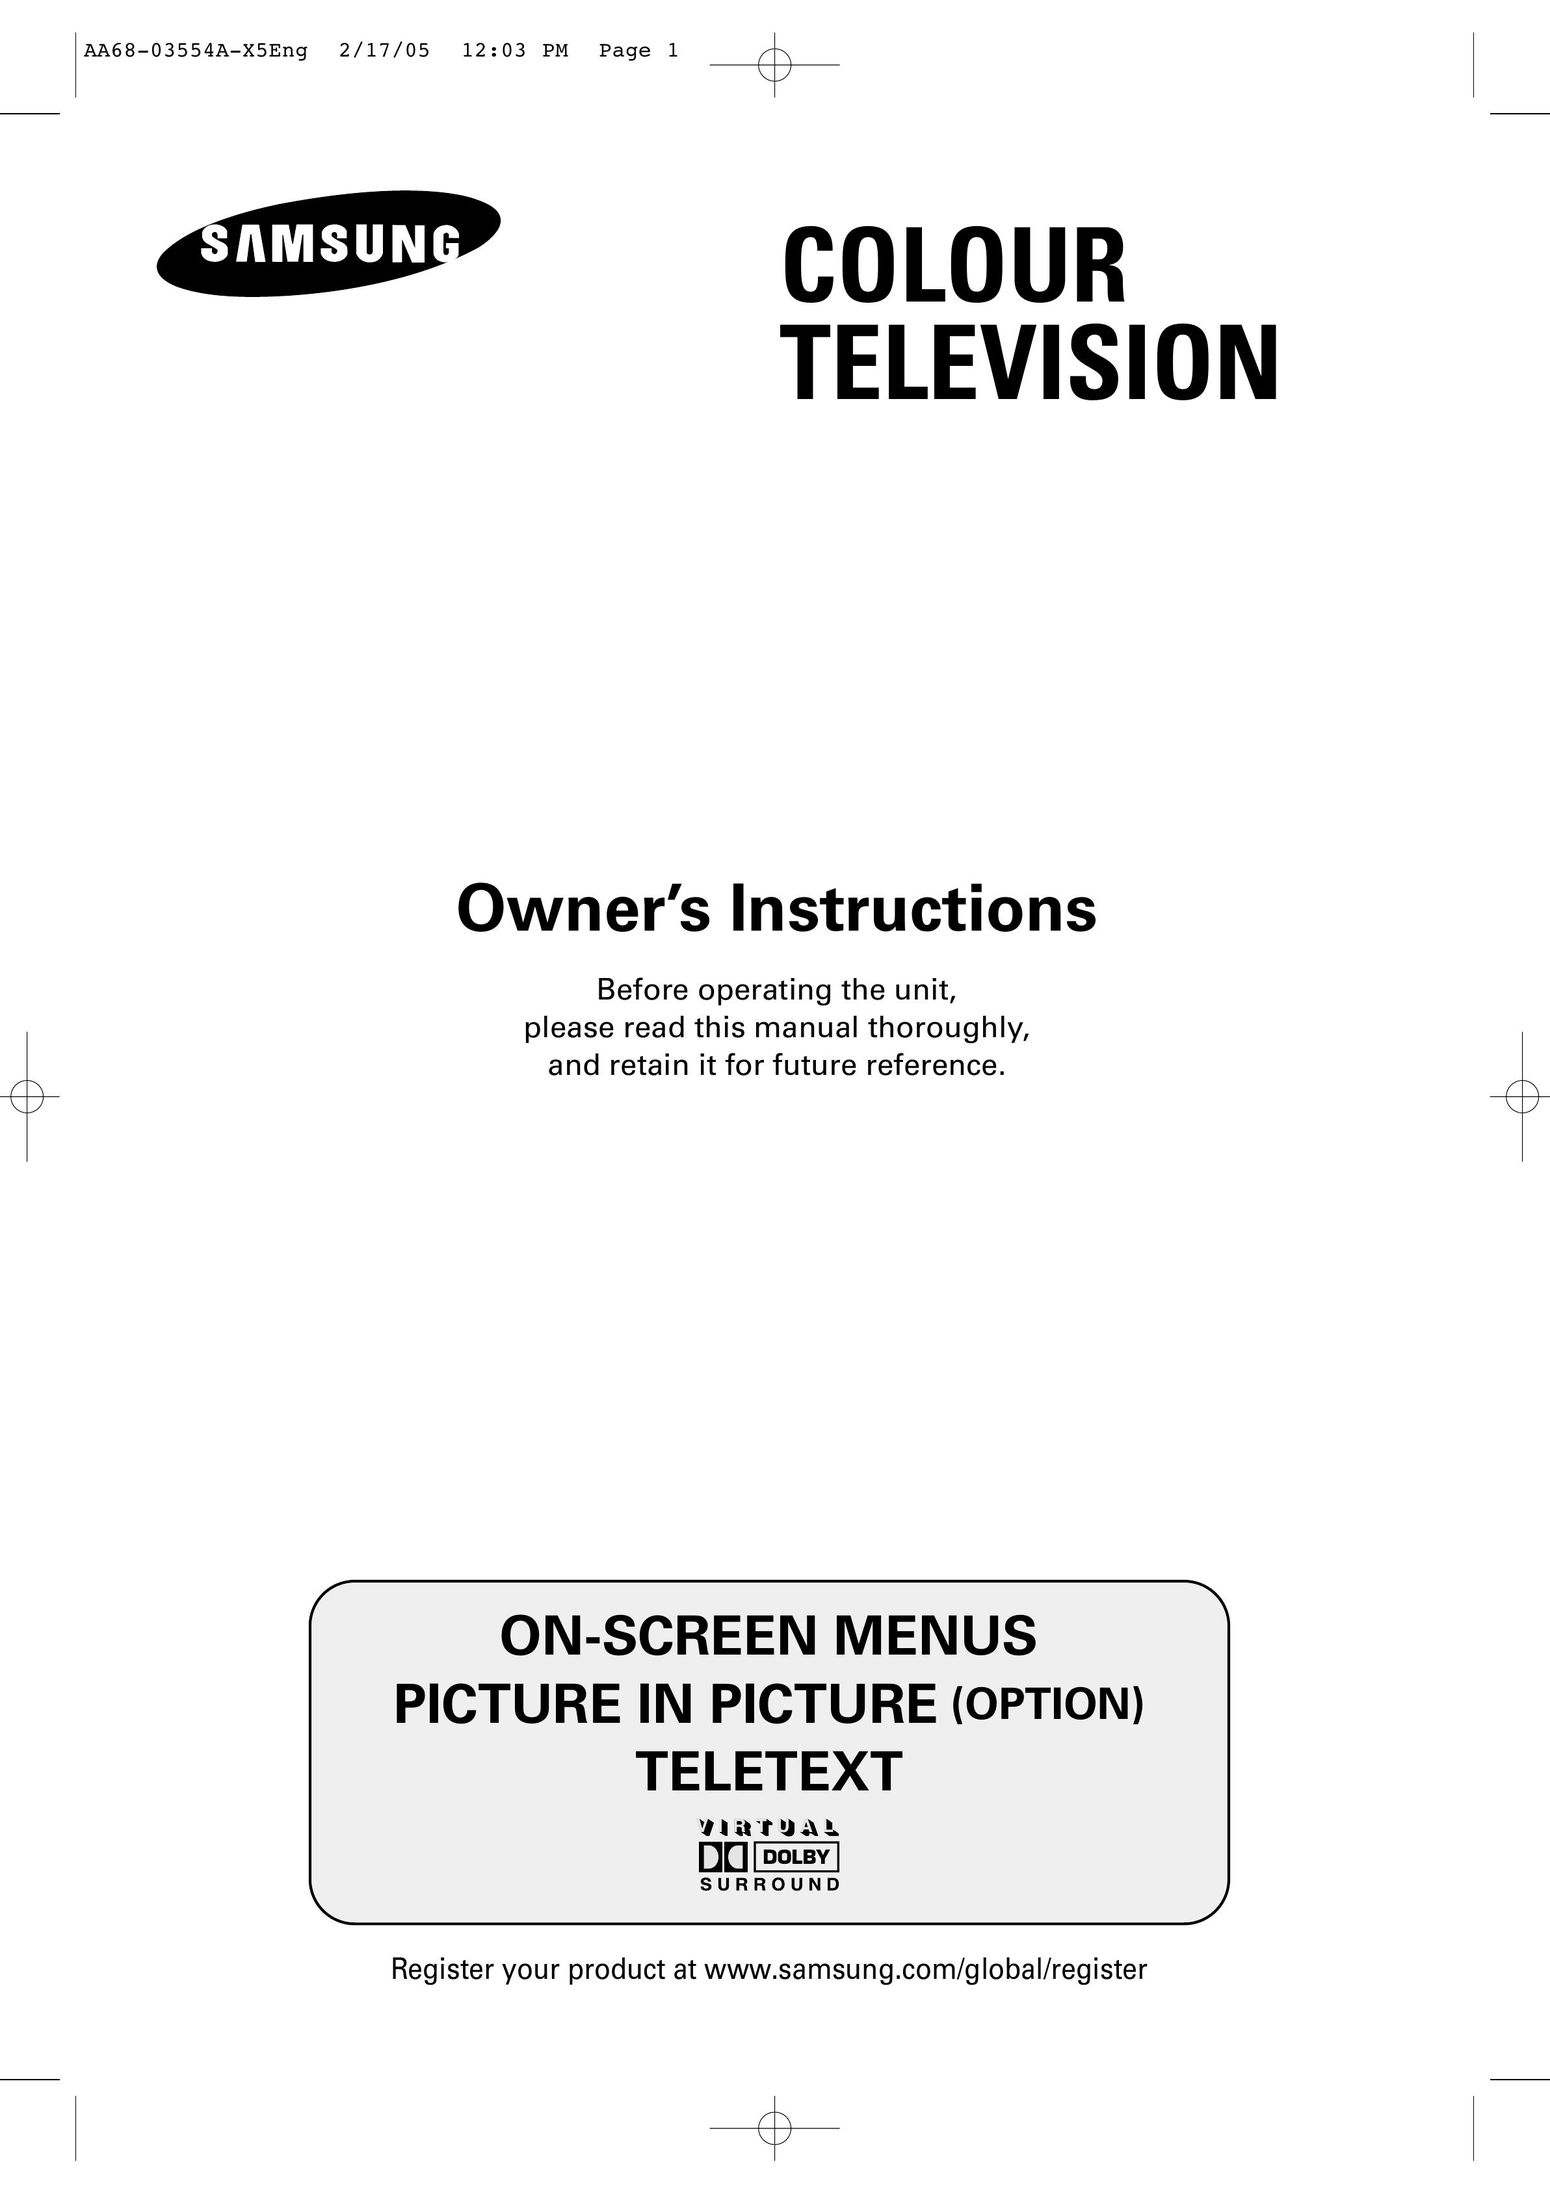 Samsung WS-32Z308P TV Receiver User Manual